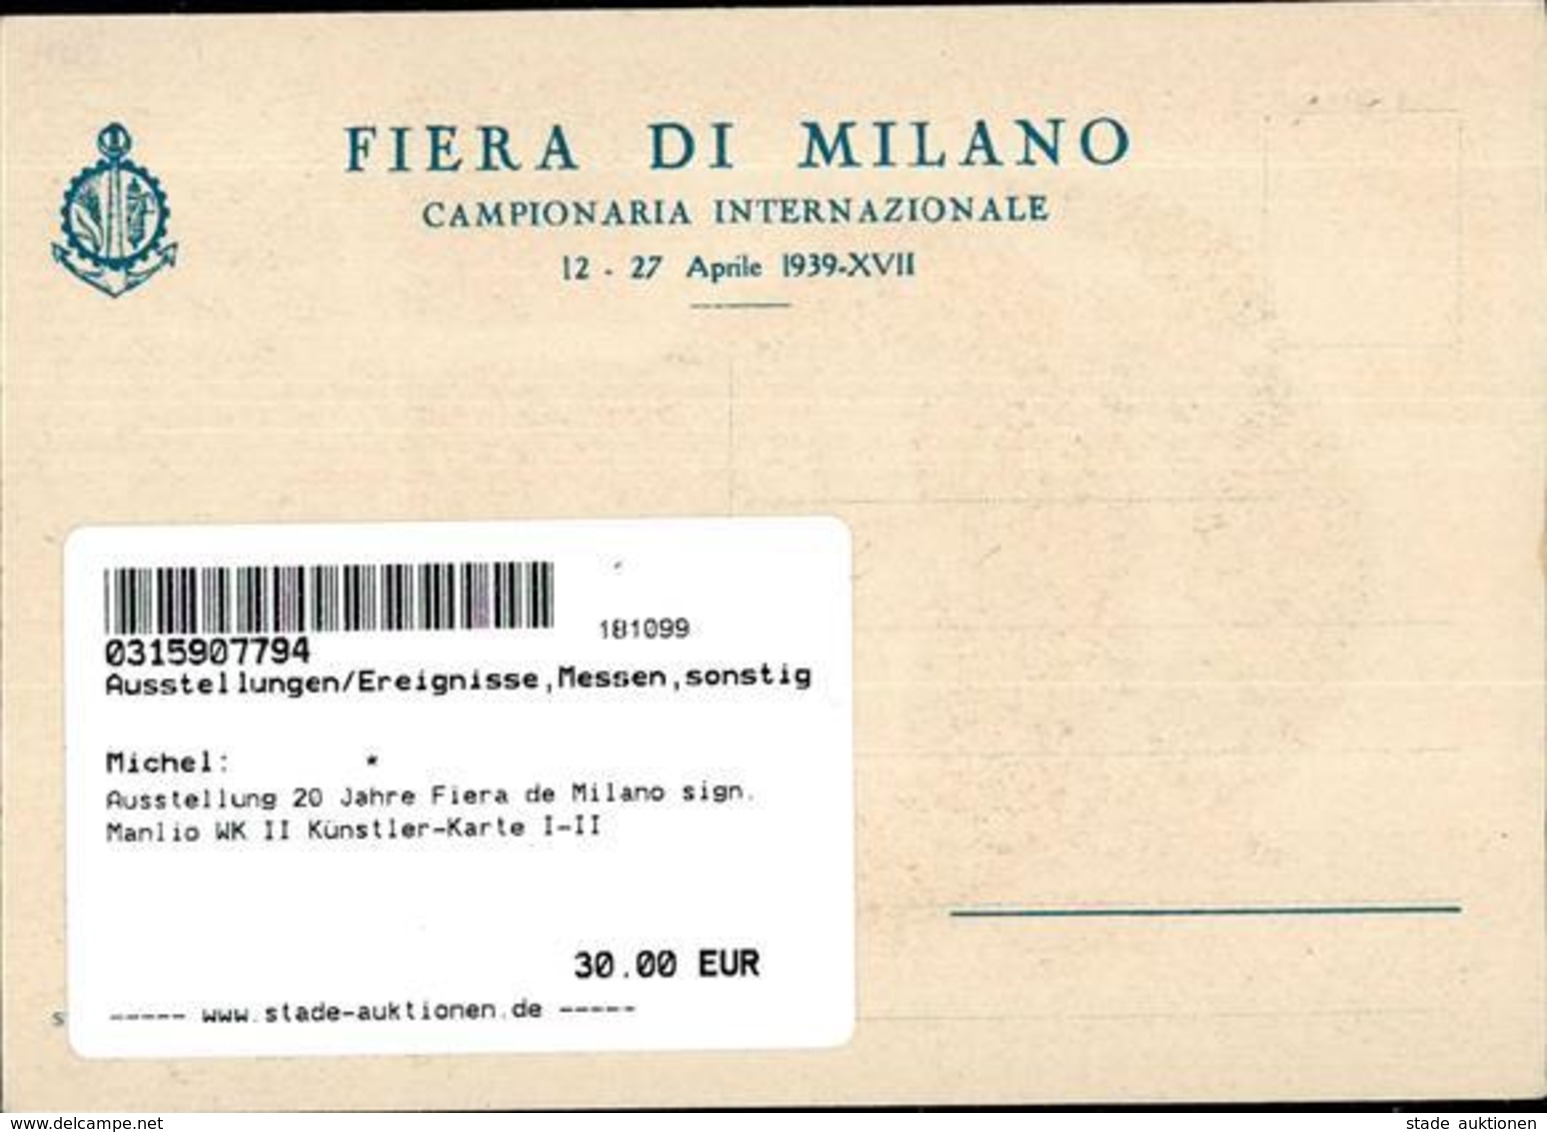 Ausstellung 20 Jahre Fiera De Milano Sign. Manlio WK II Künstler-Karte I-II Expo - Esposizioni